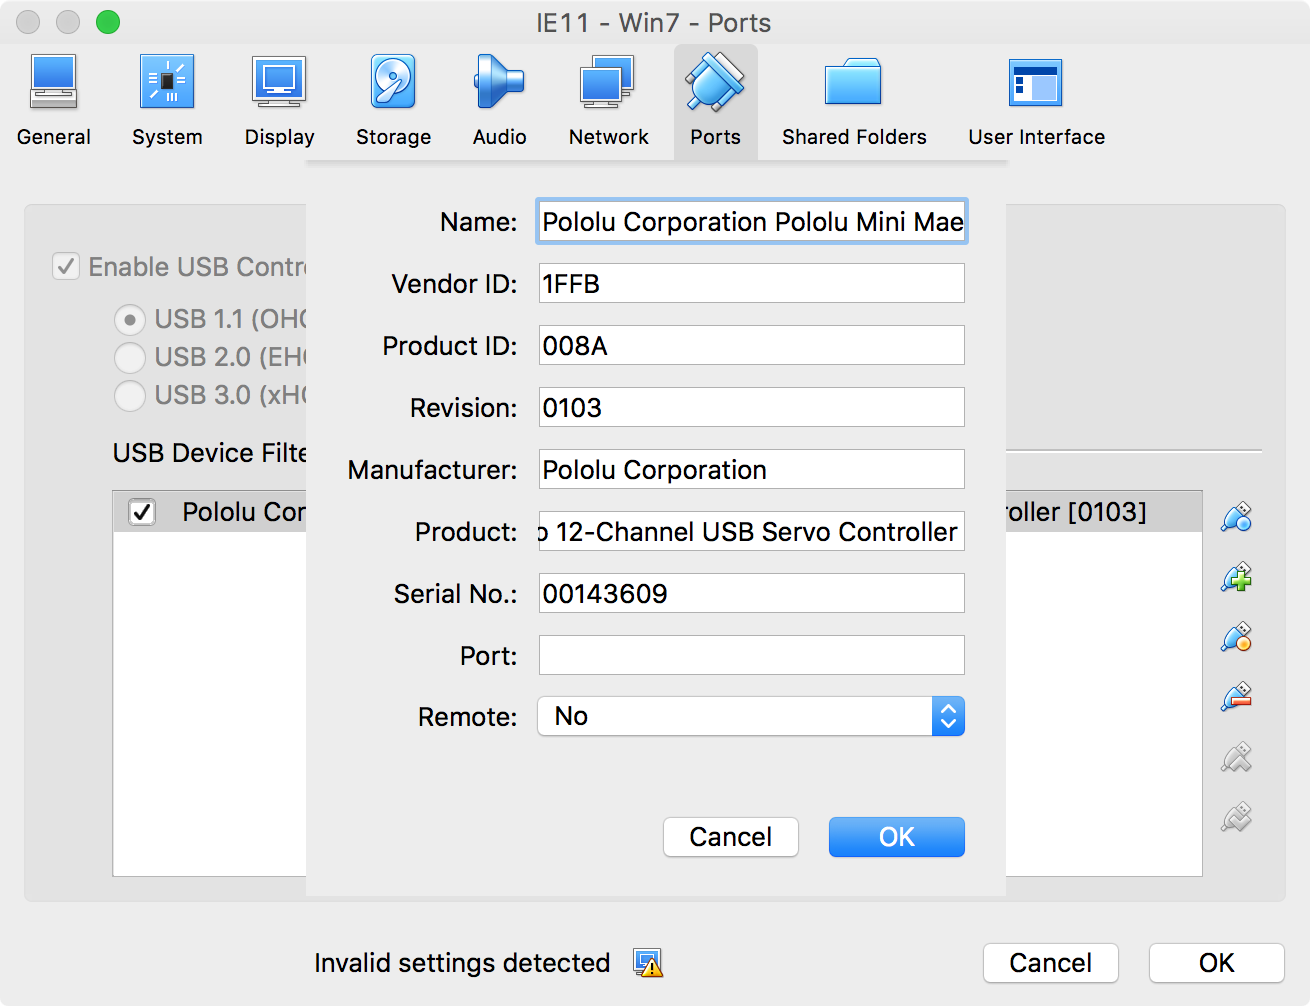 Creating a USB Device Filter in VirtualBox for the Pololu Mini Maestro